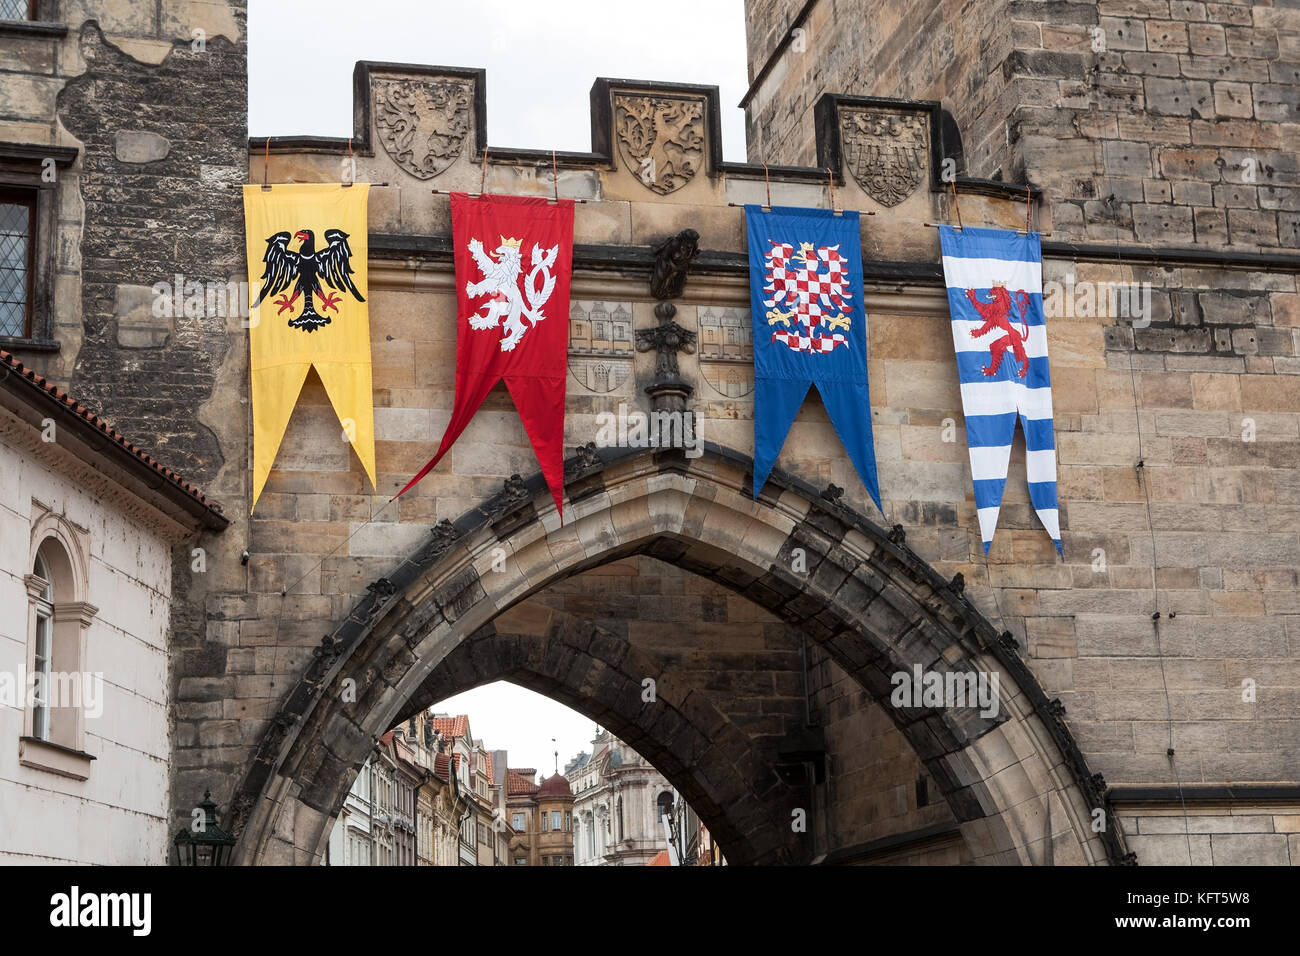 Medieval Castle Flags